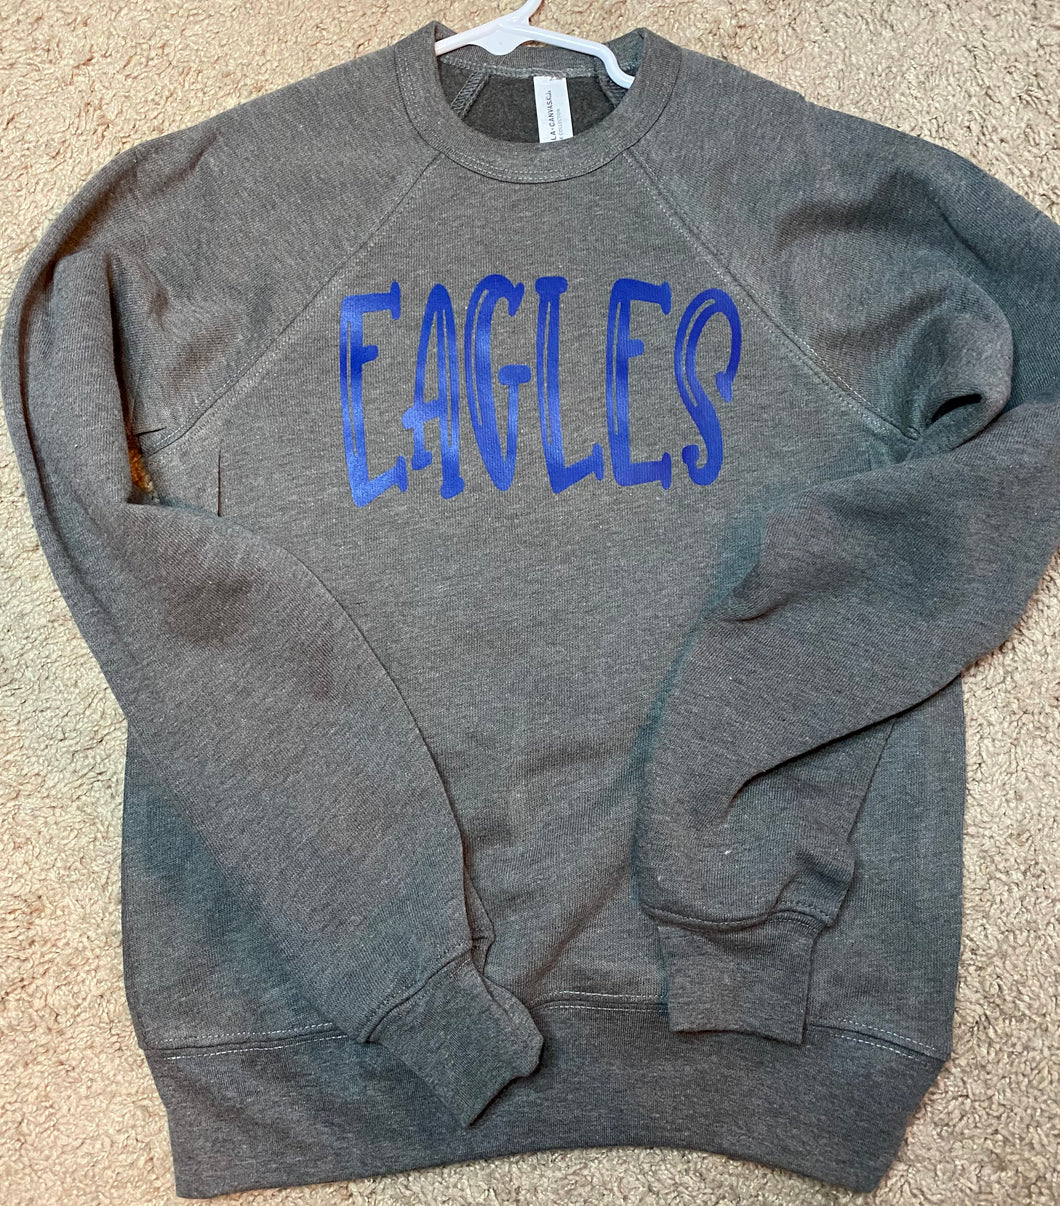 Eagles Youth Sweatshirt